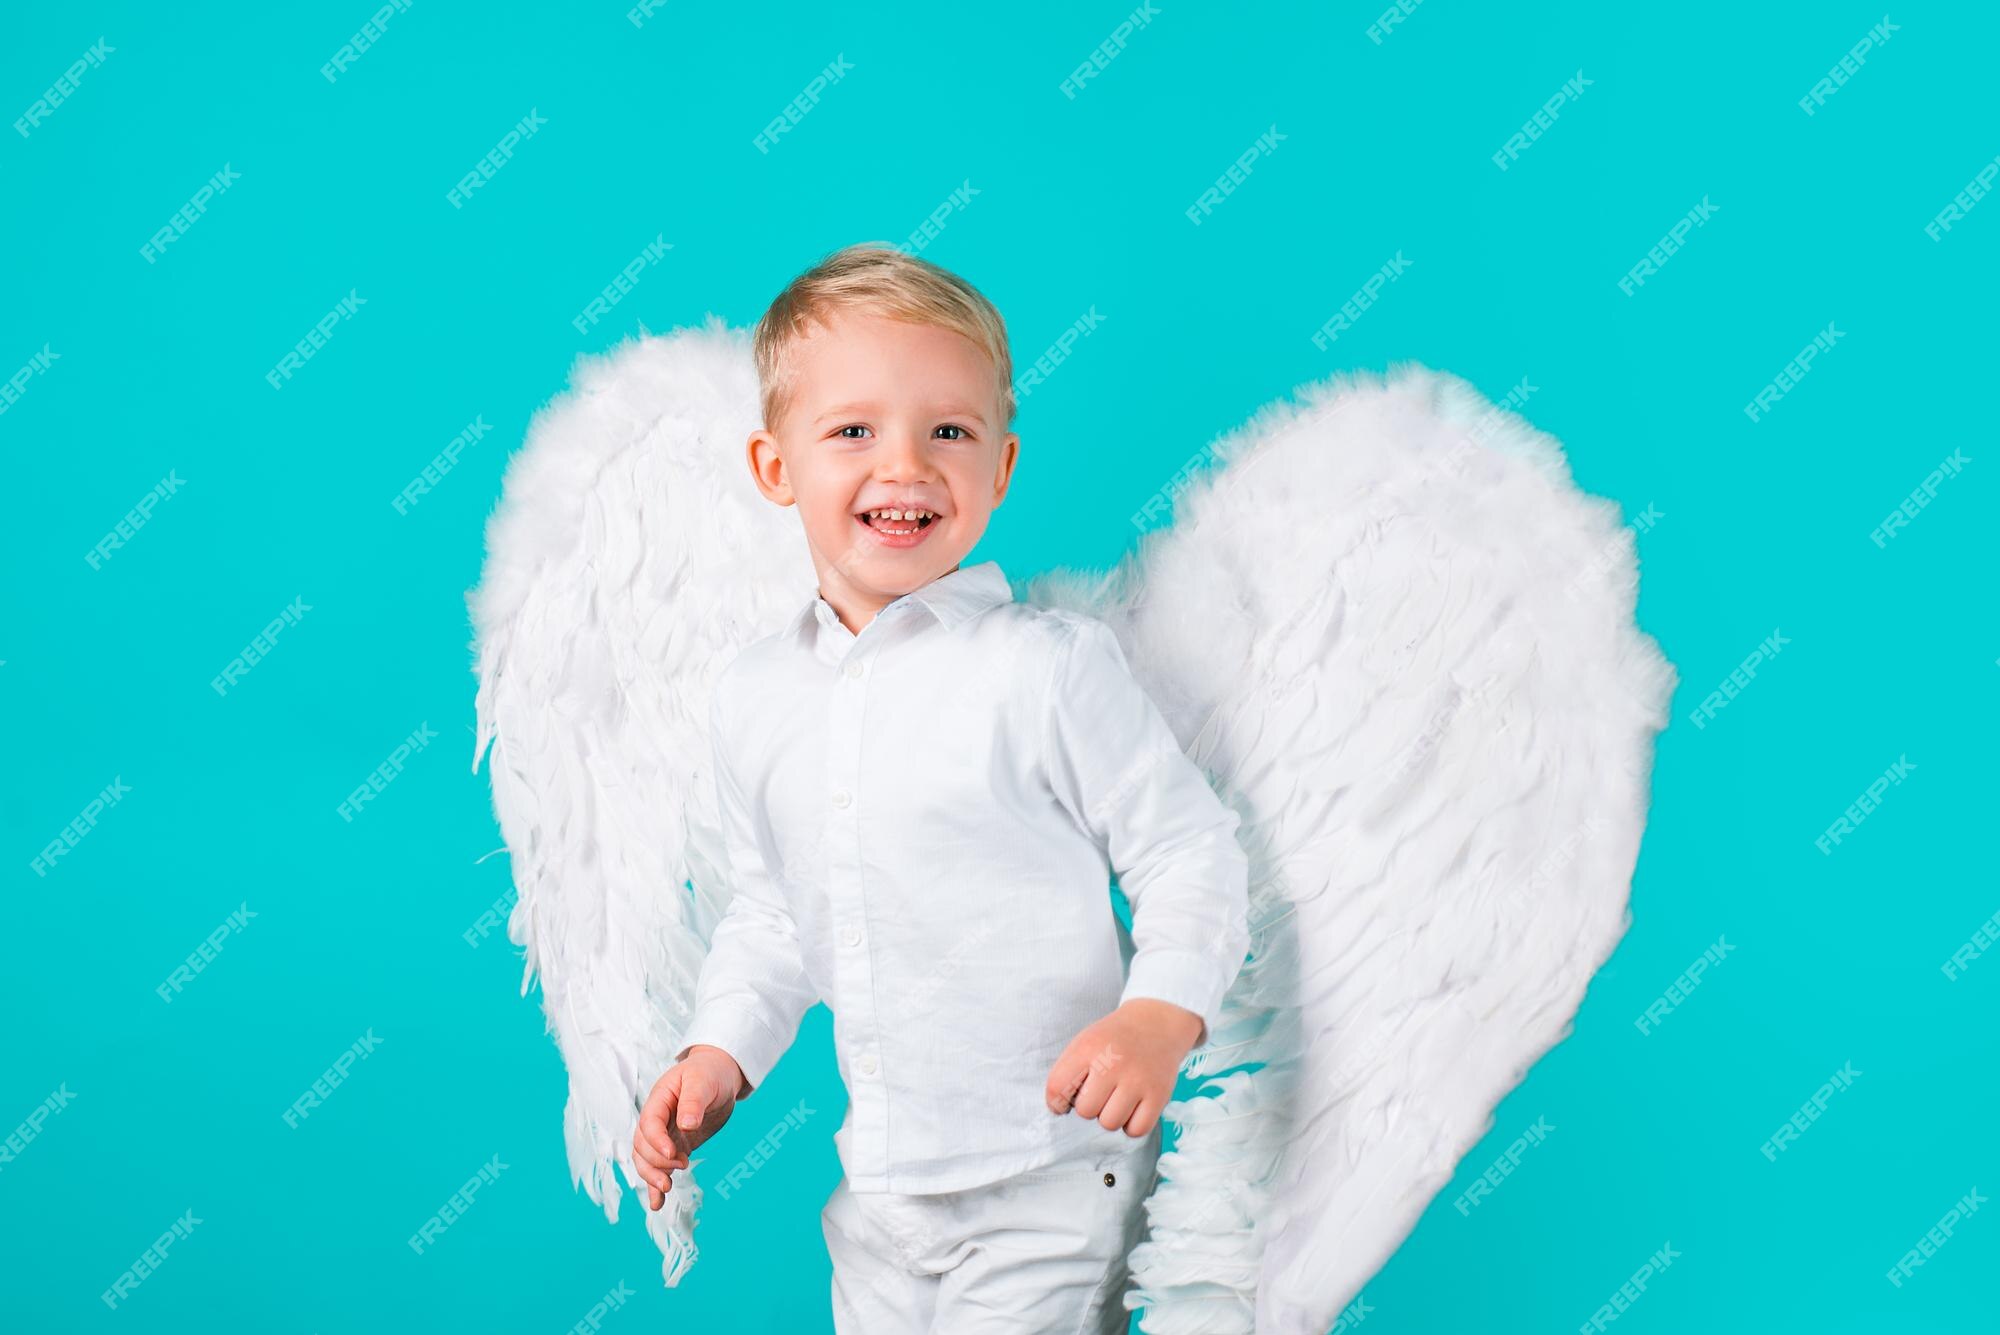 Hermoso angelito aislado de san valentín niño lindo niño vestido blanco de pie sobre fondo azul | Foto Premium